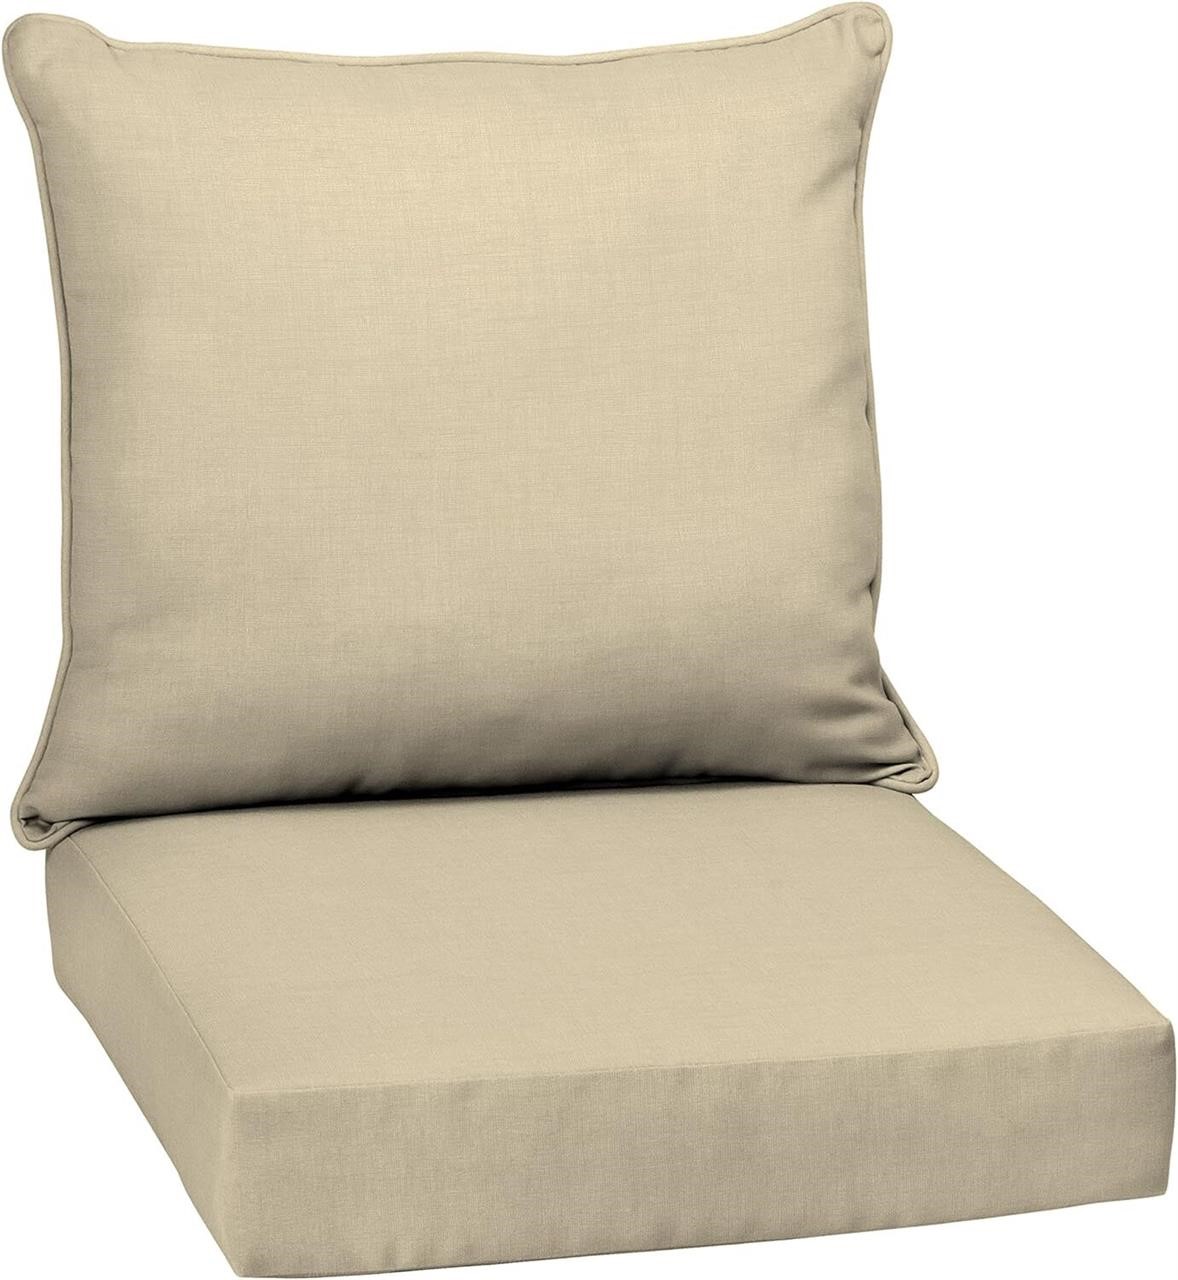 Arden selections outdoor cushion